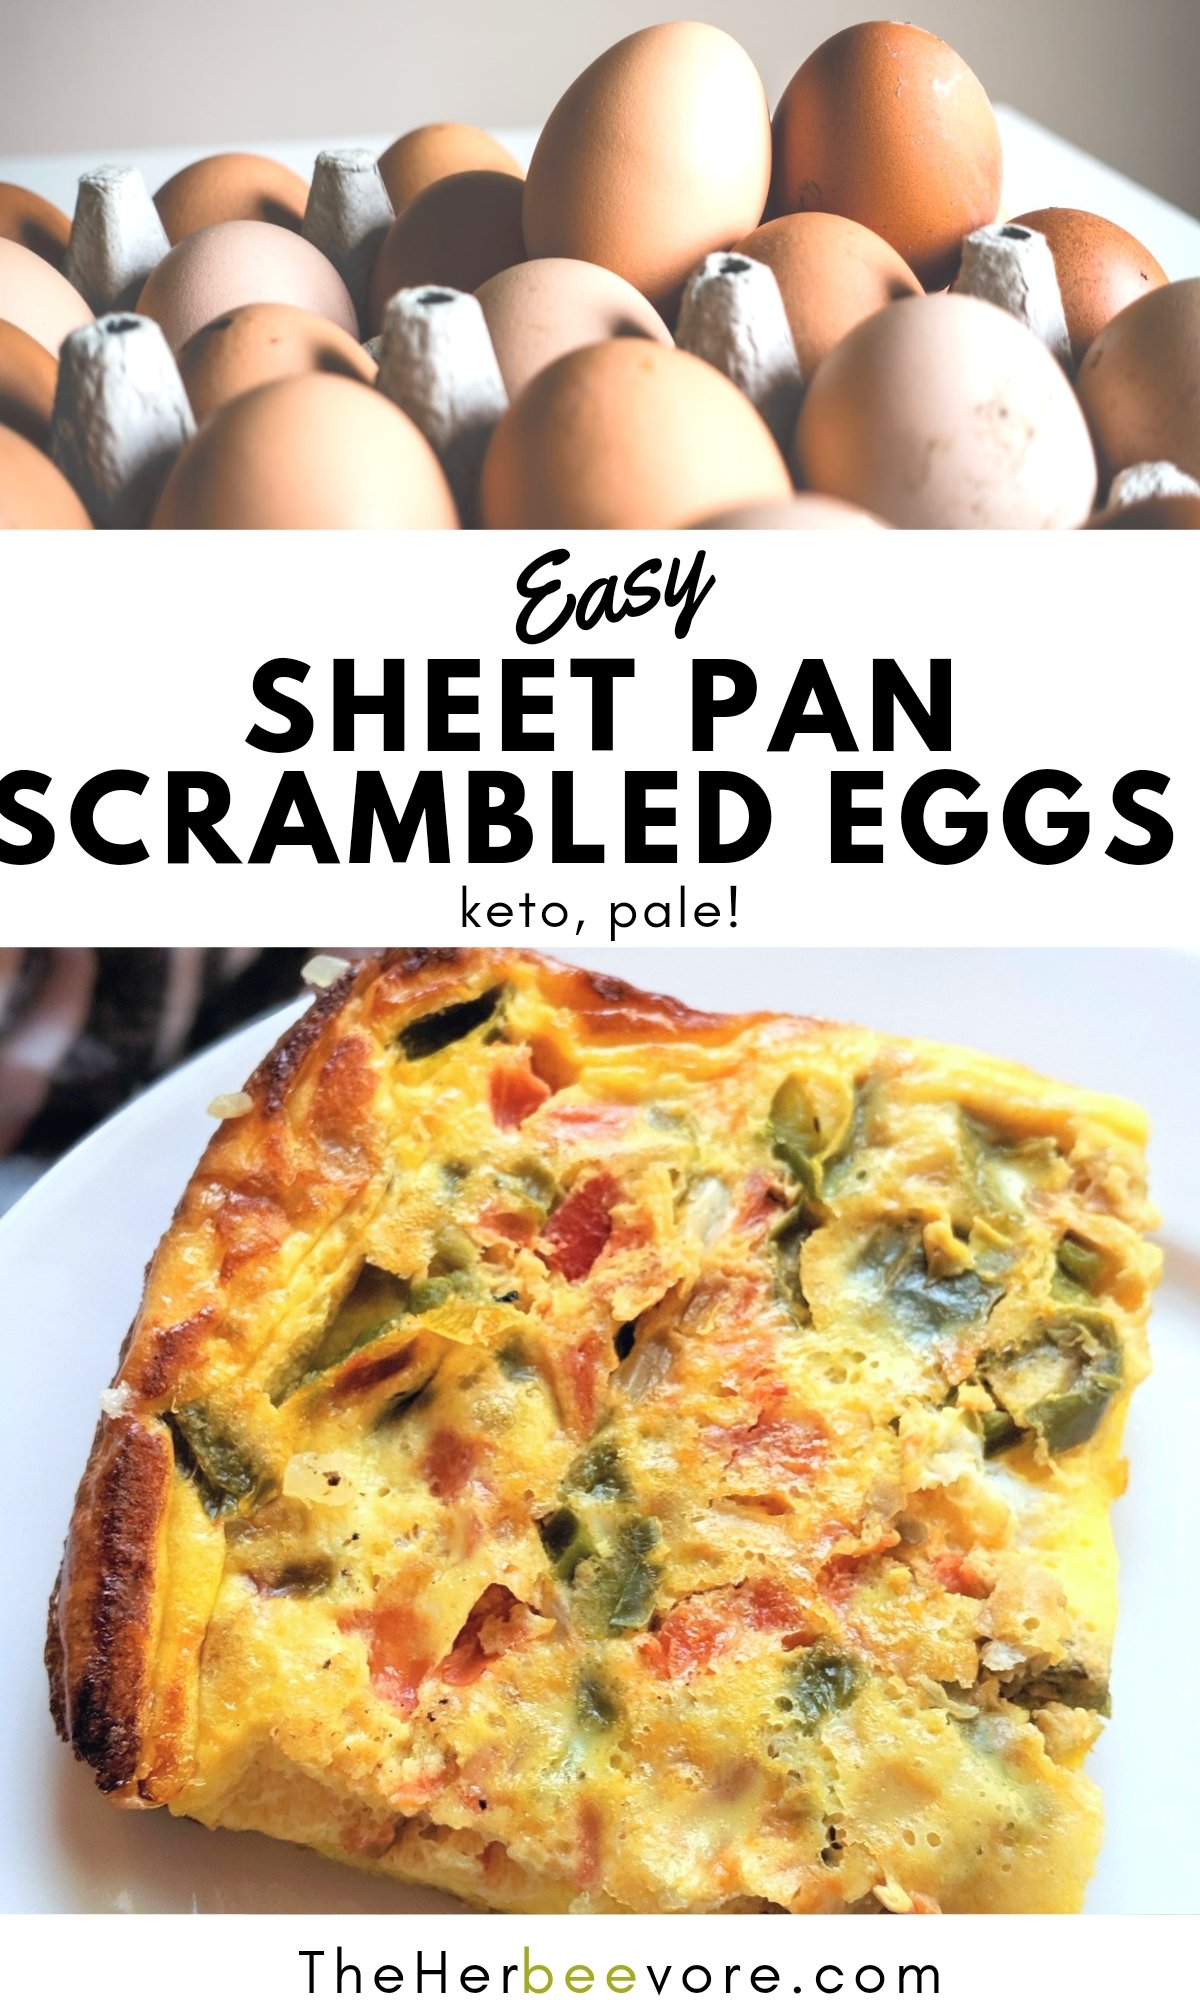 sheet pan scrambled eggs recipe paleo breakfast recipes easy keto meals for breakfast or brunch